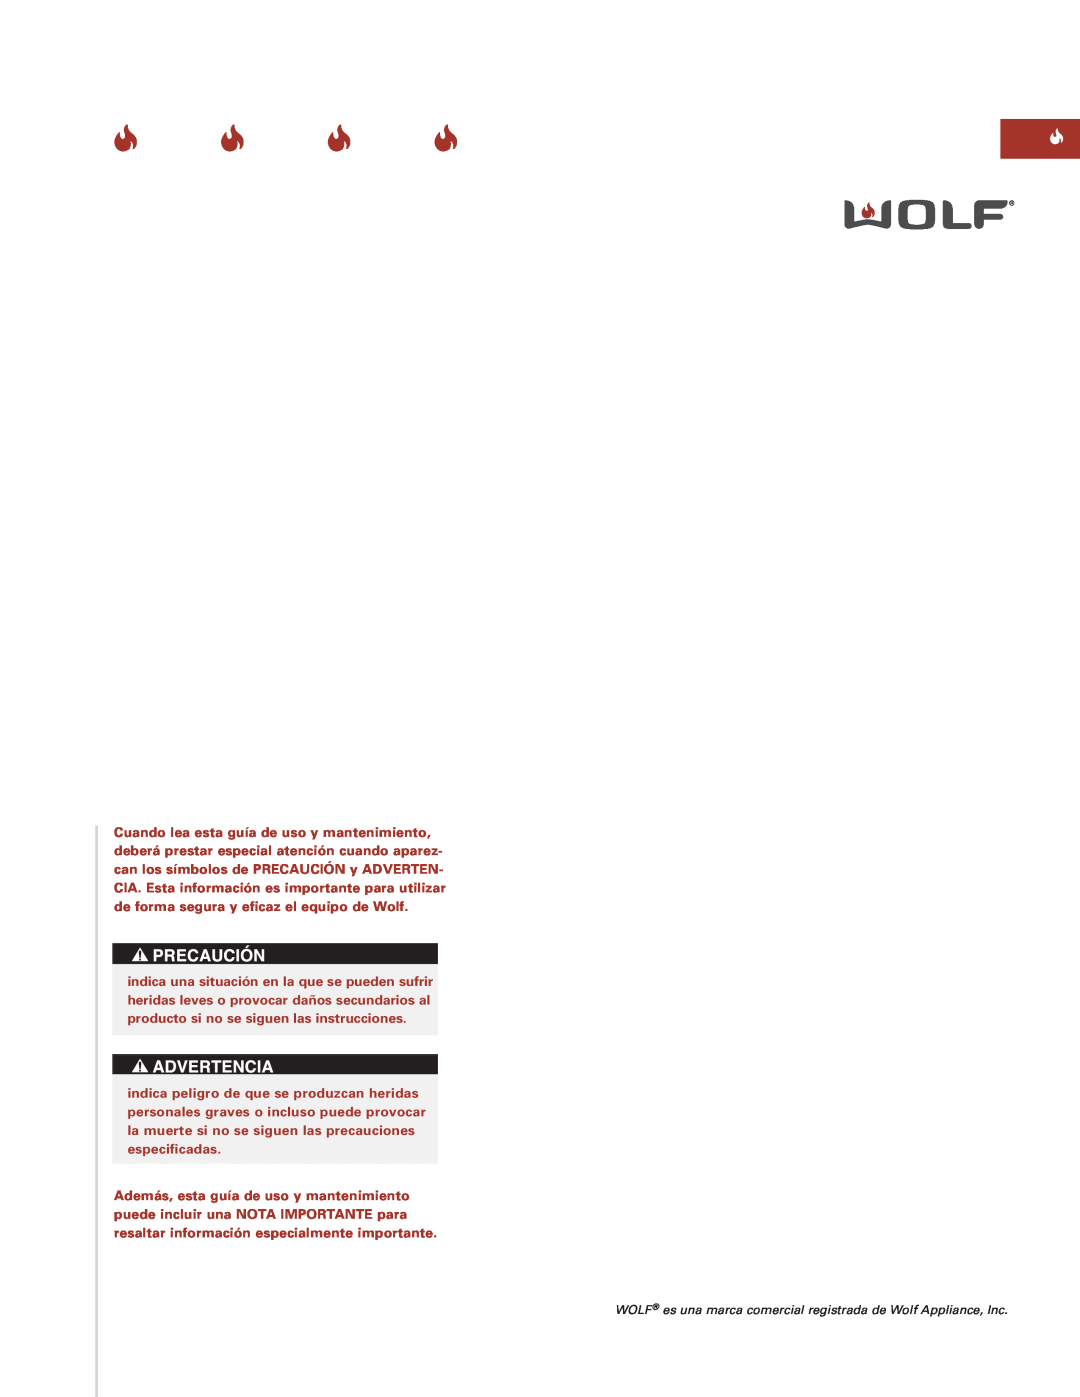 Sub-Zero Sealed Burner RangeTop manual WOLF es una marca comercial registrada de Wolf Appliance, Inc 